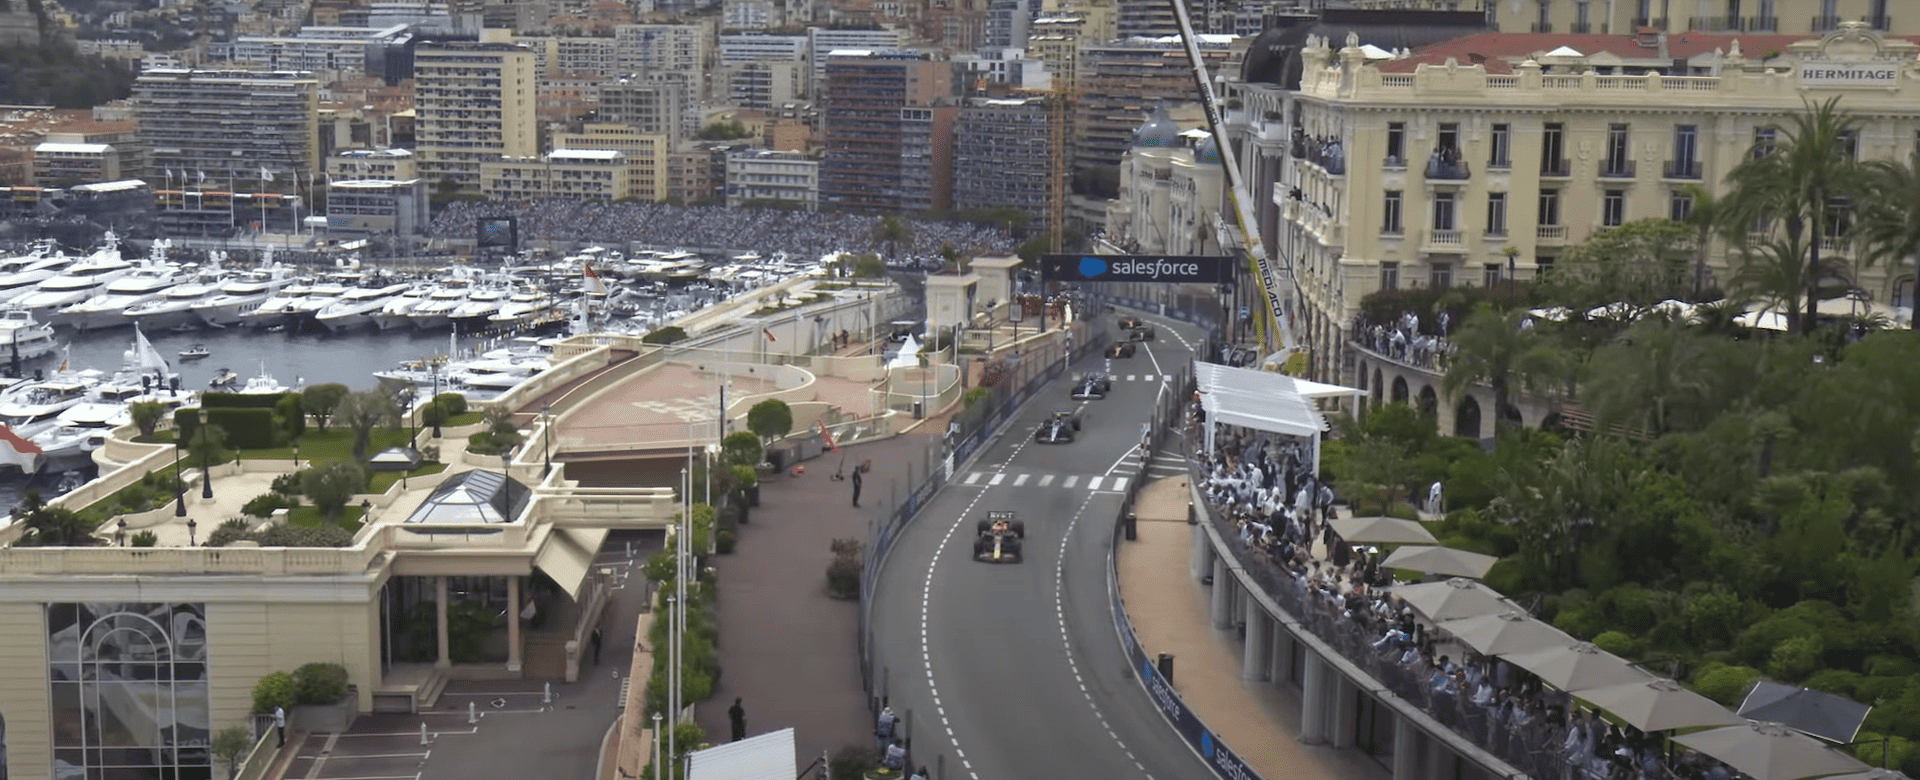 The circuit on the streets of Monaco